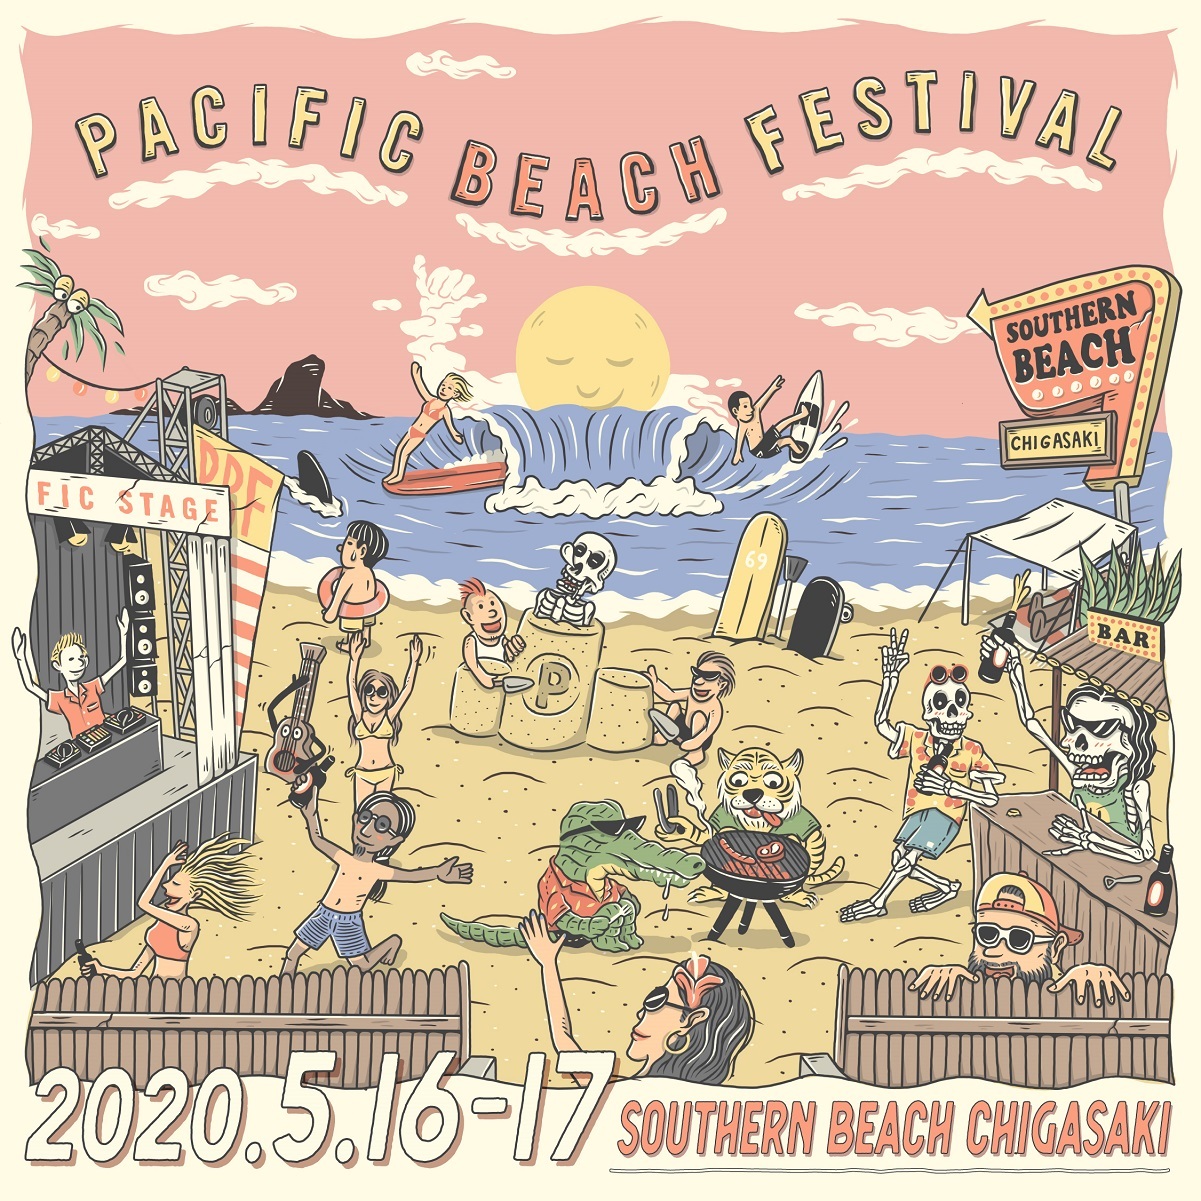 PACIFIC BEACH FESTIVAL’20